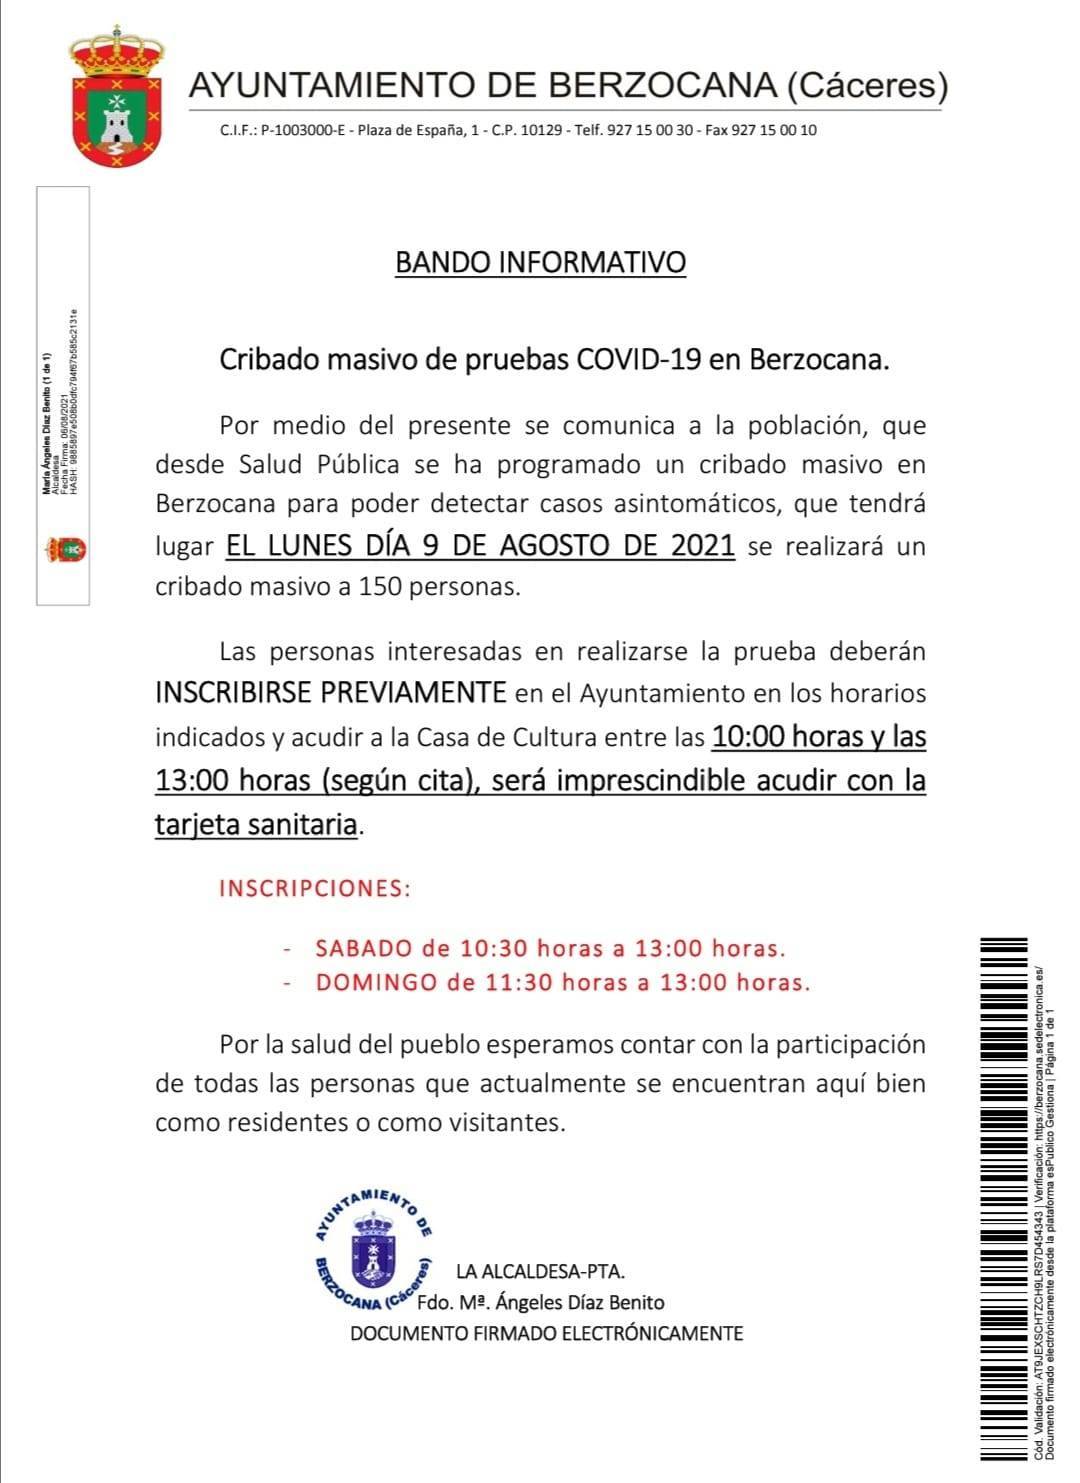 Cribado masivo de COVID-19 (agosto 2021) - Berzocana (Cáceres)